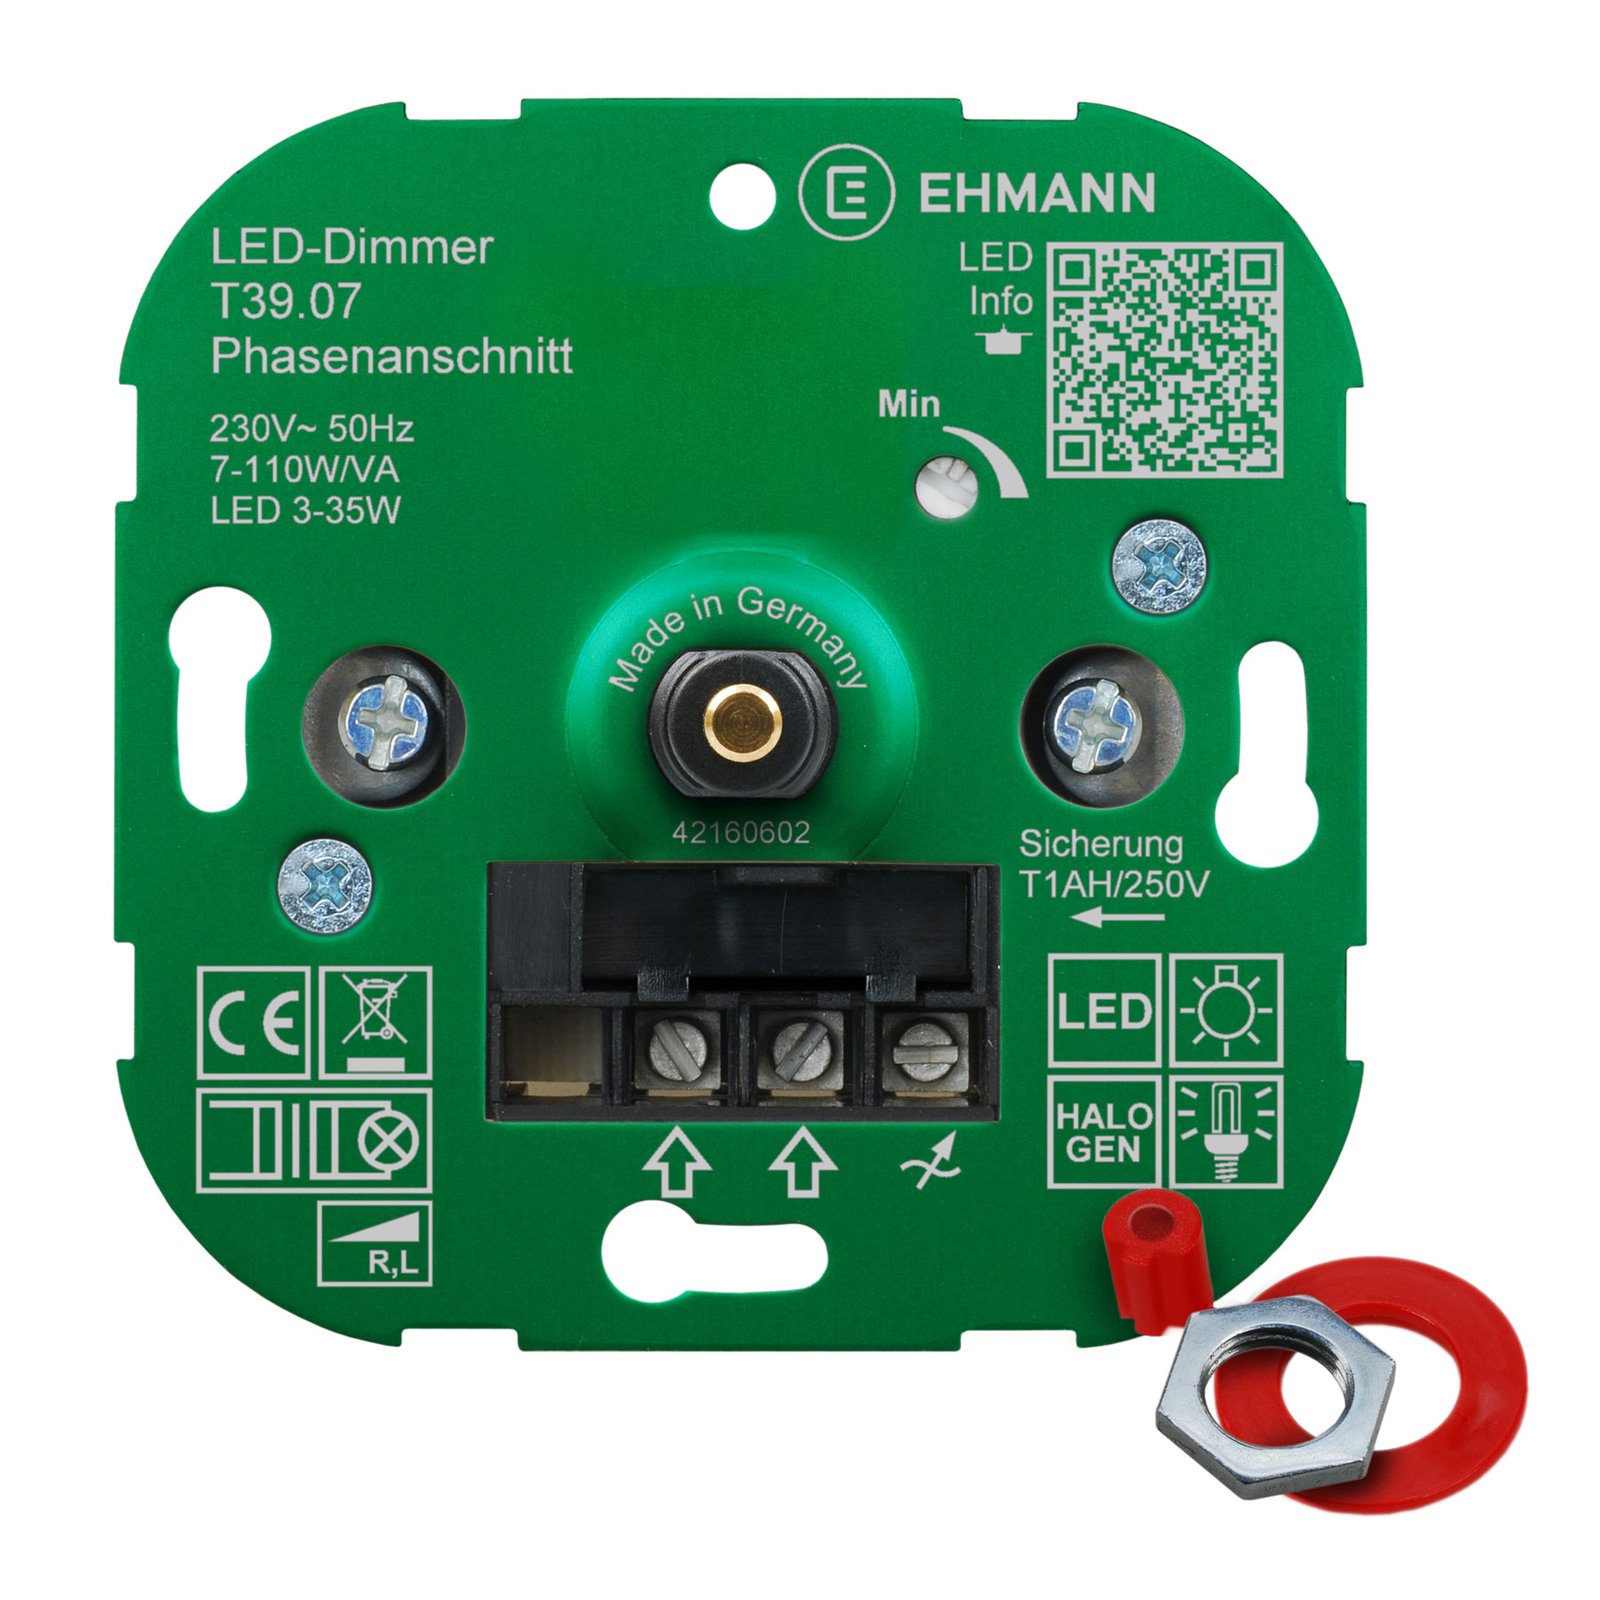 EHMANN T39 LED stmievač fázová regulácia 7 – 110 W